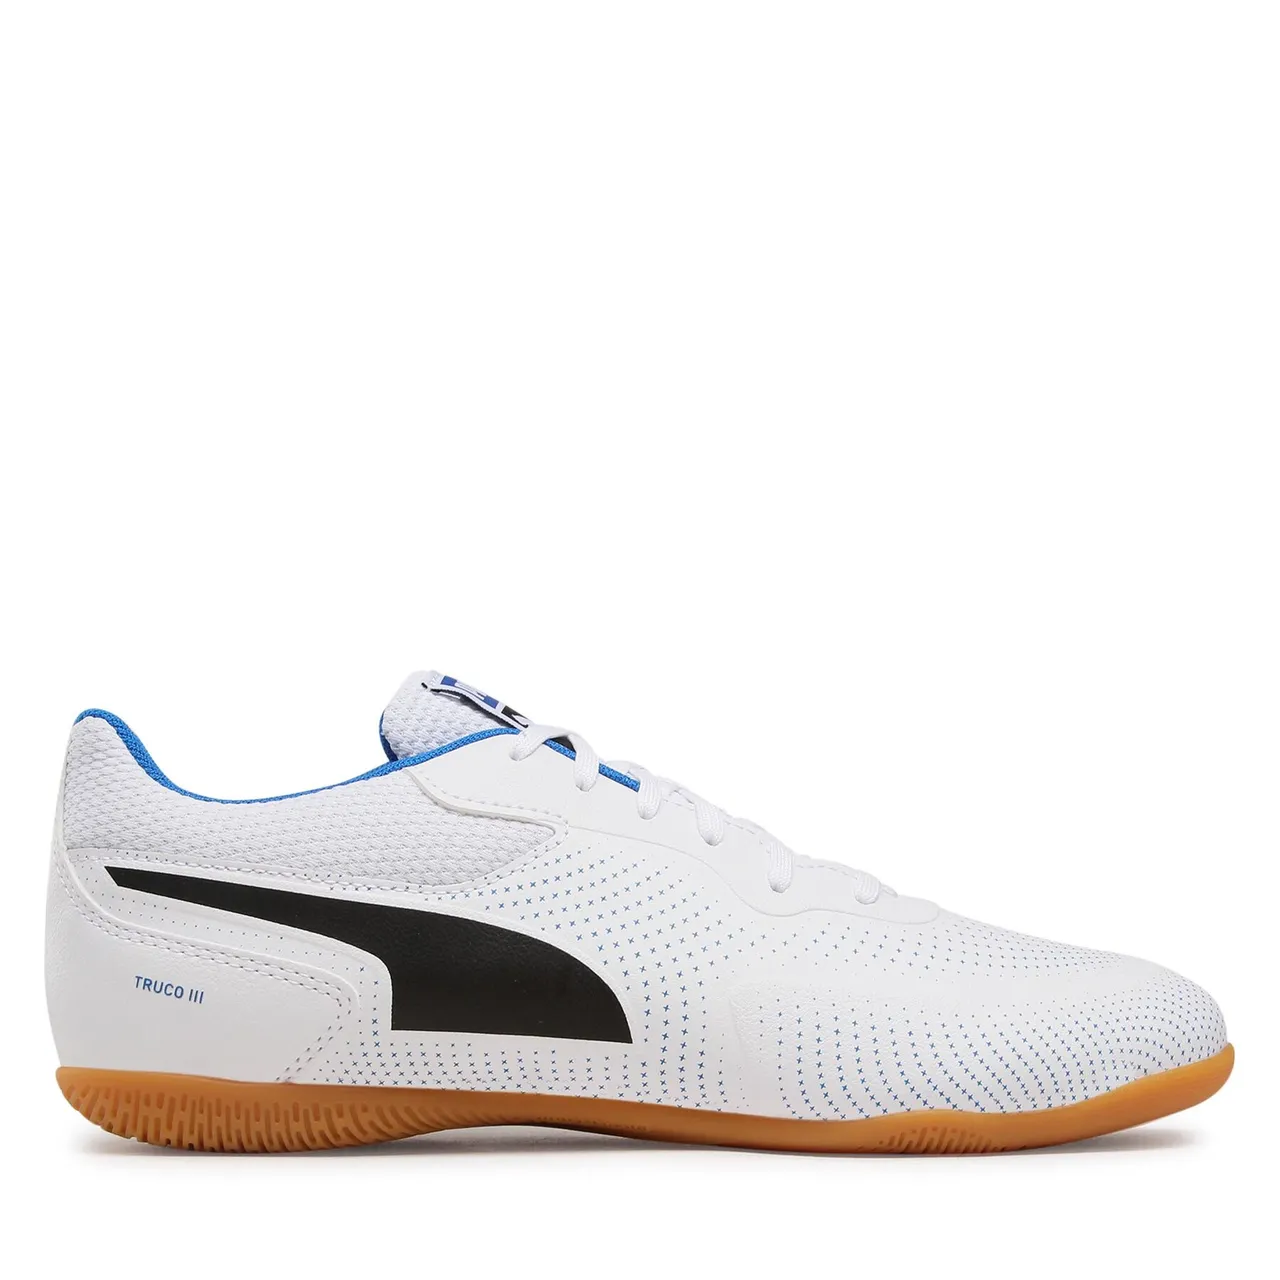 Schuhe Puma Truco III Jr 106935 04 White/Black/Team Royal